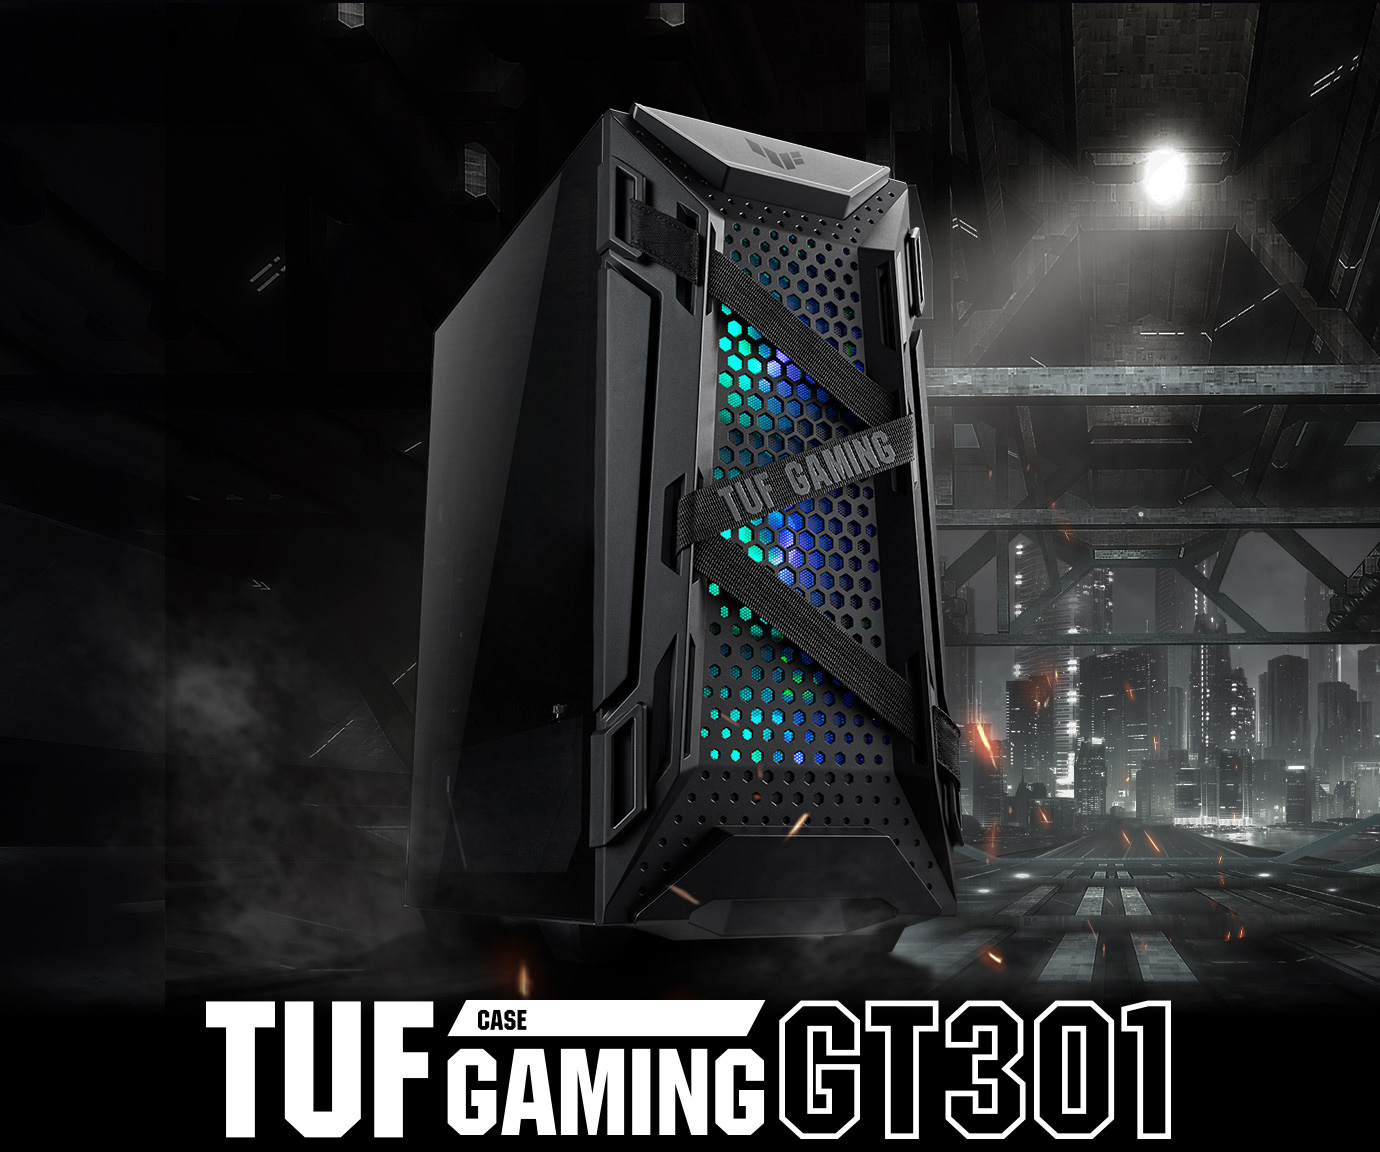 ASUS TUF Gaming GT301 gaming case product photo.